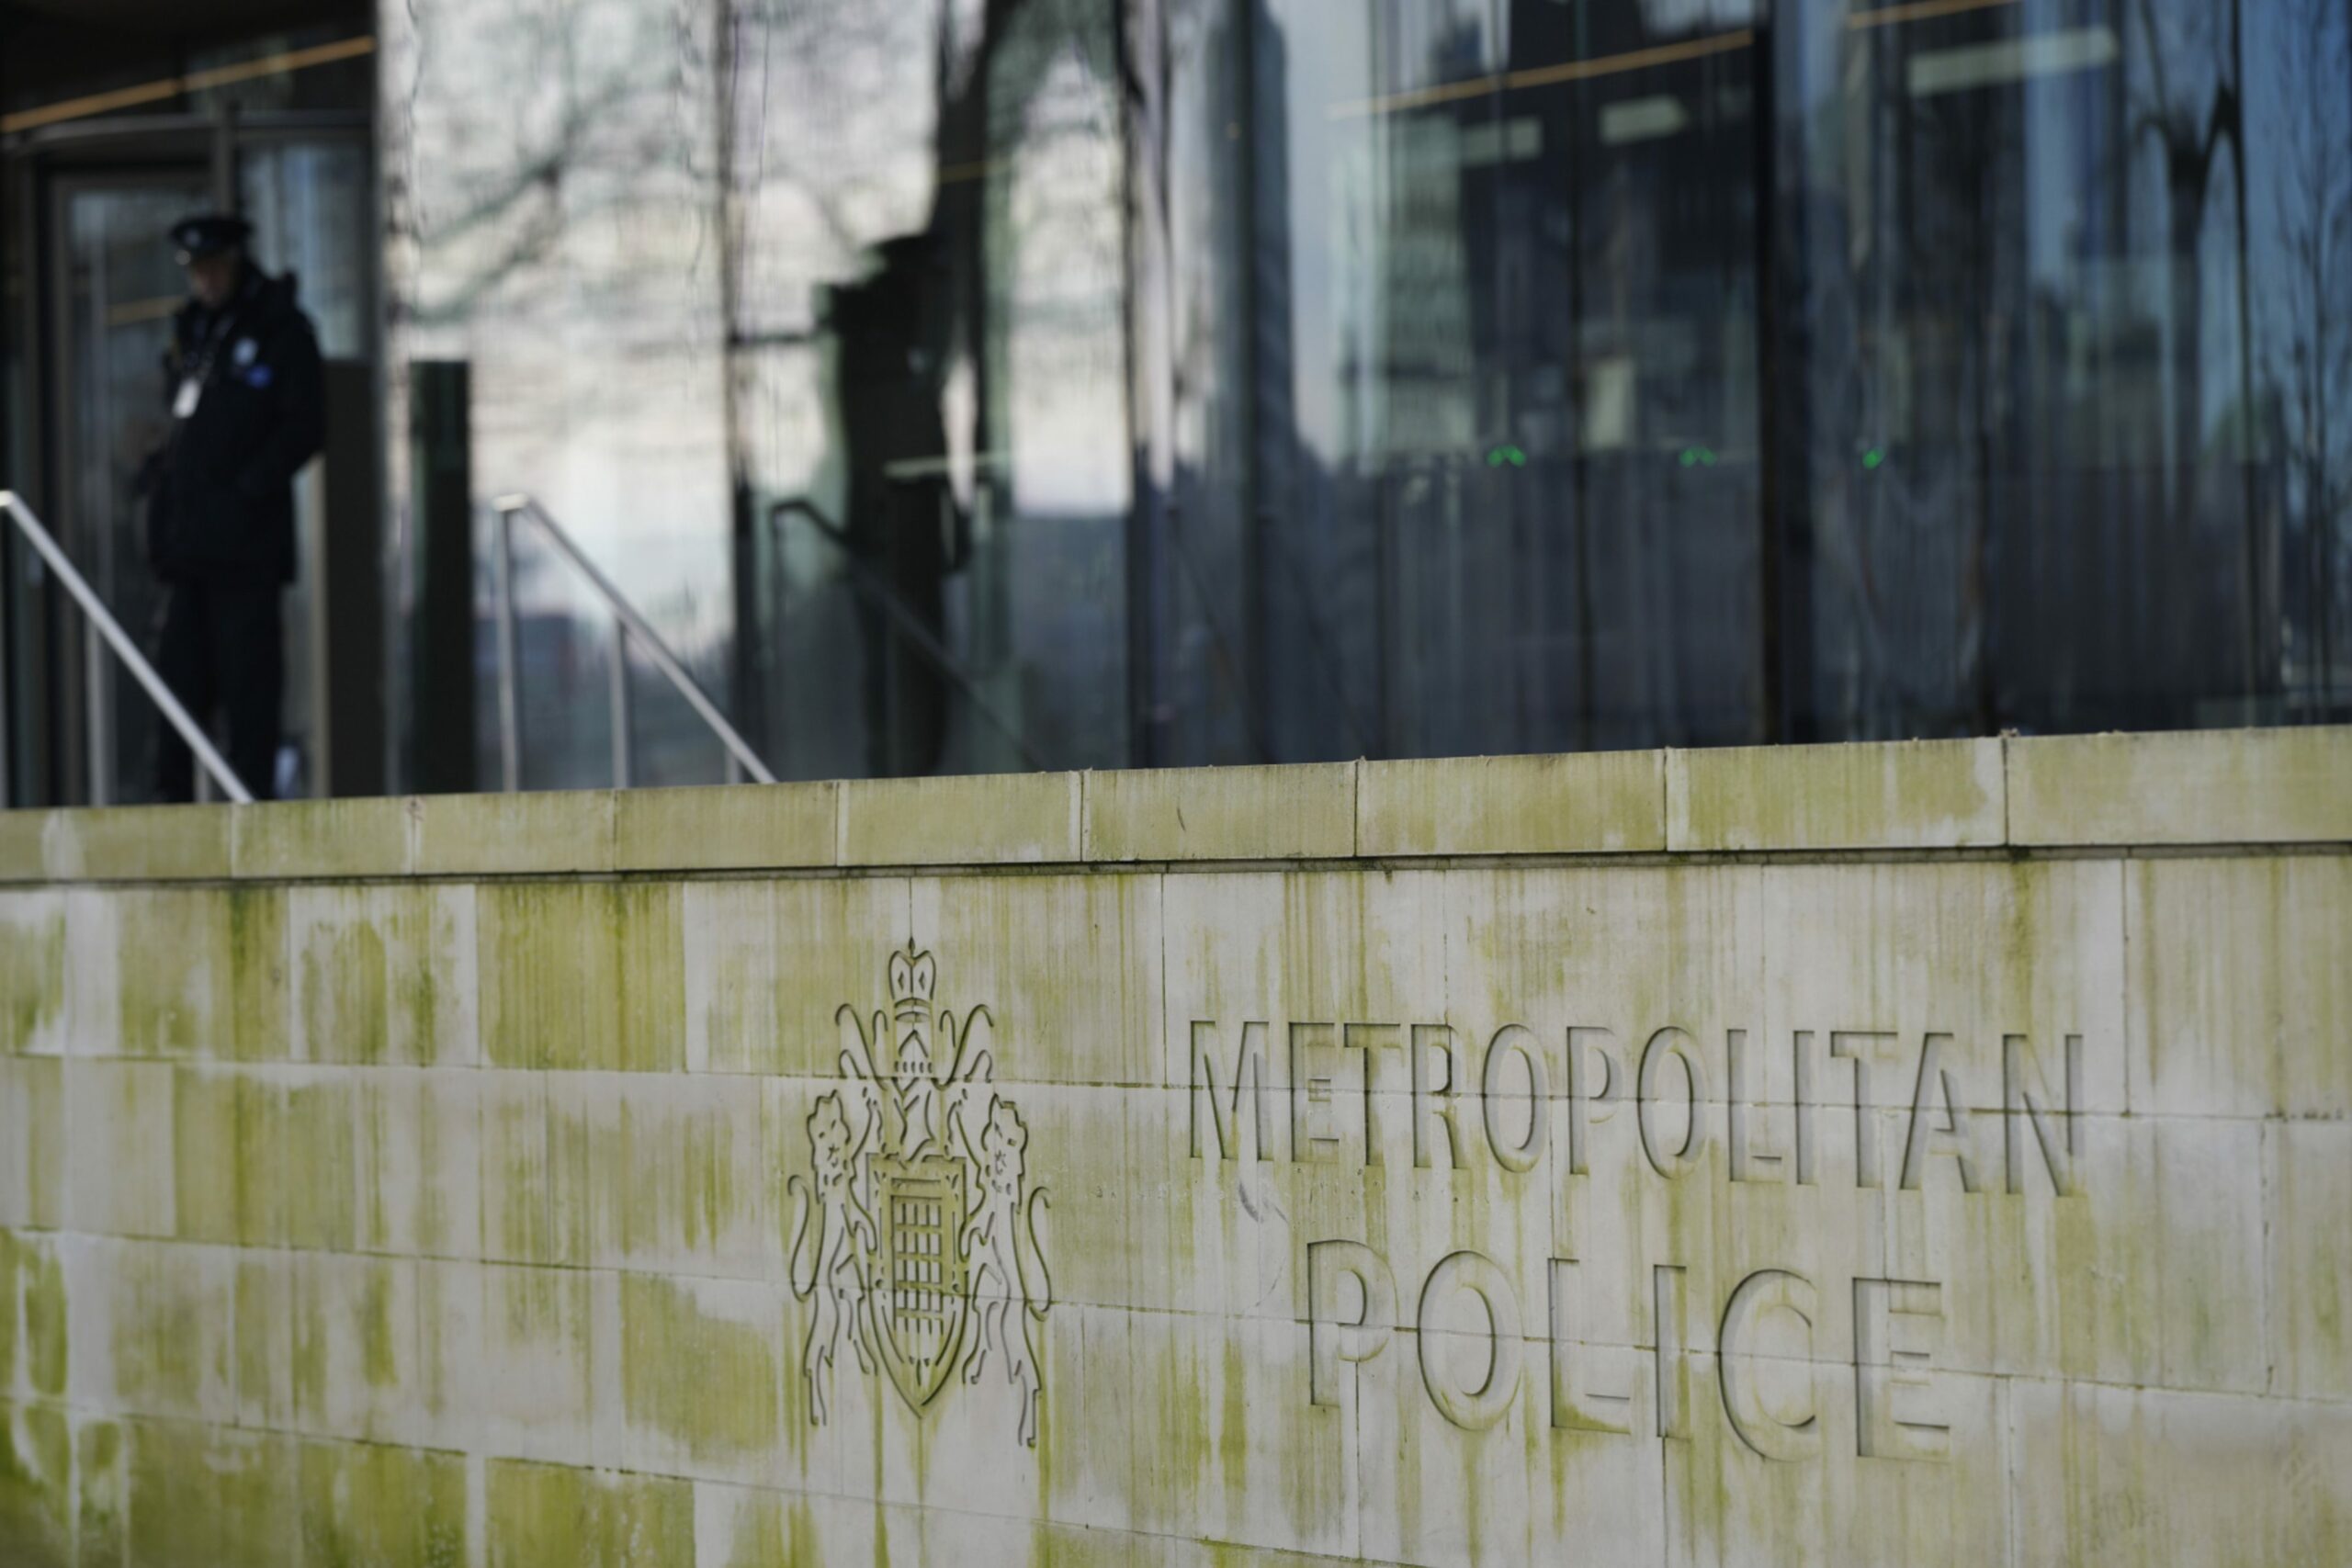 Met Police headquarters in London. Image: Shutterstock